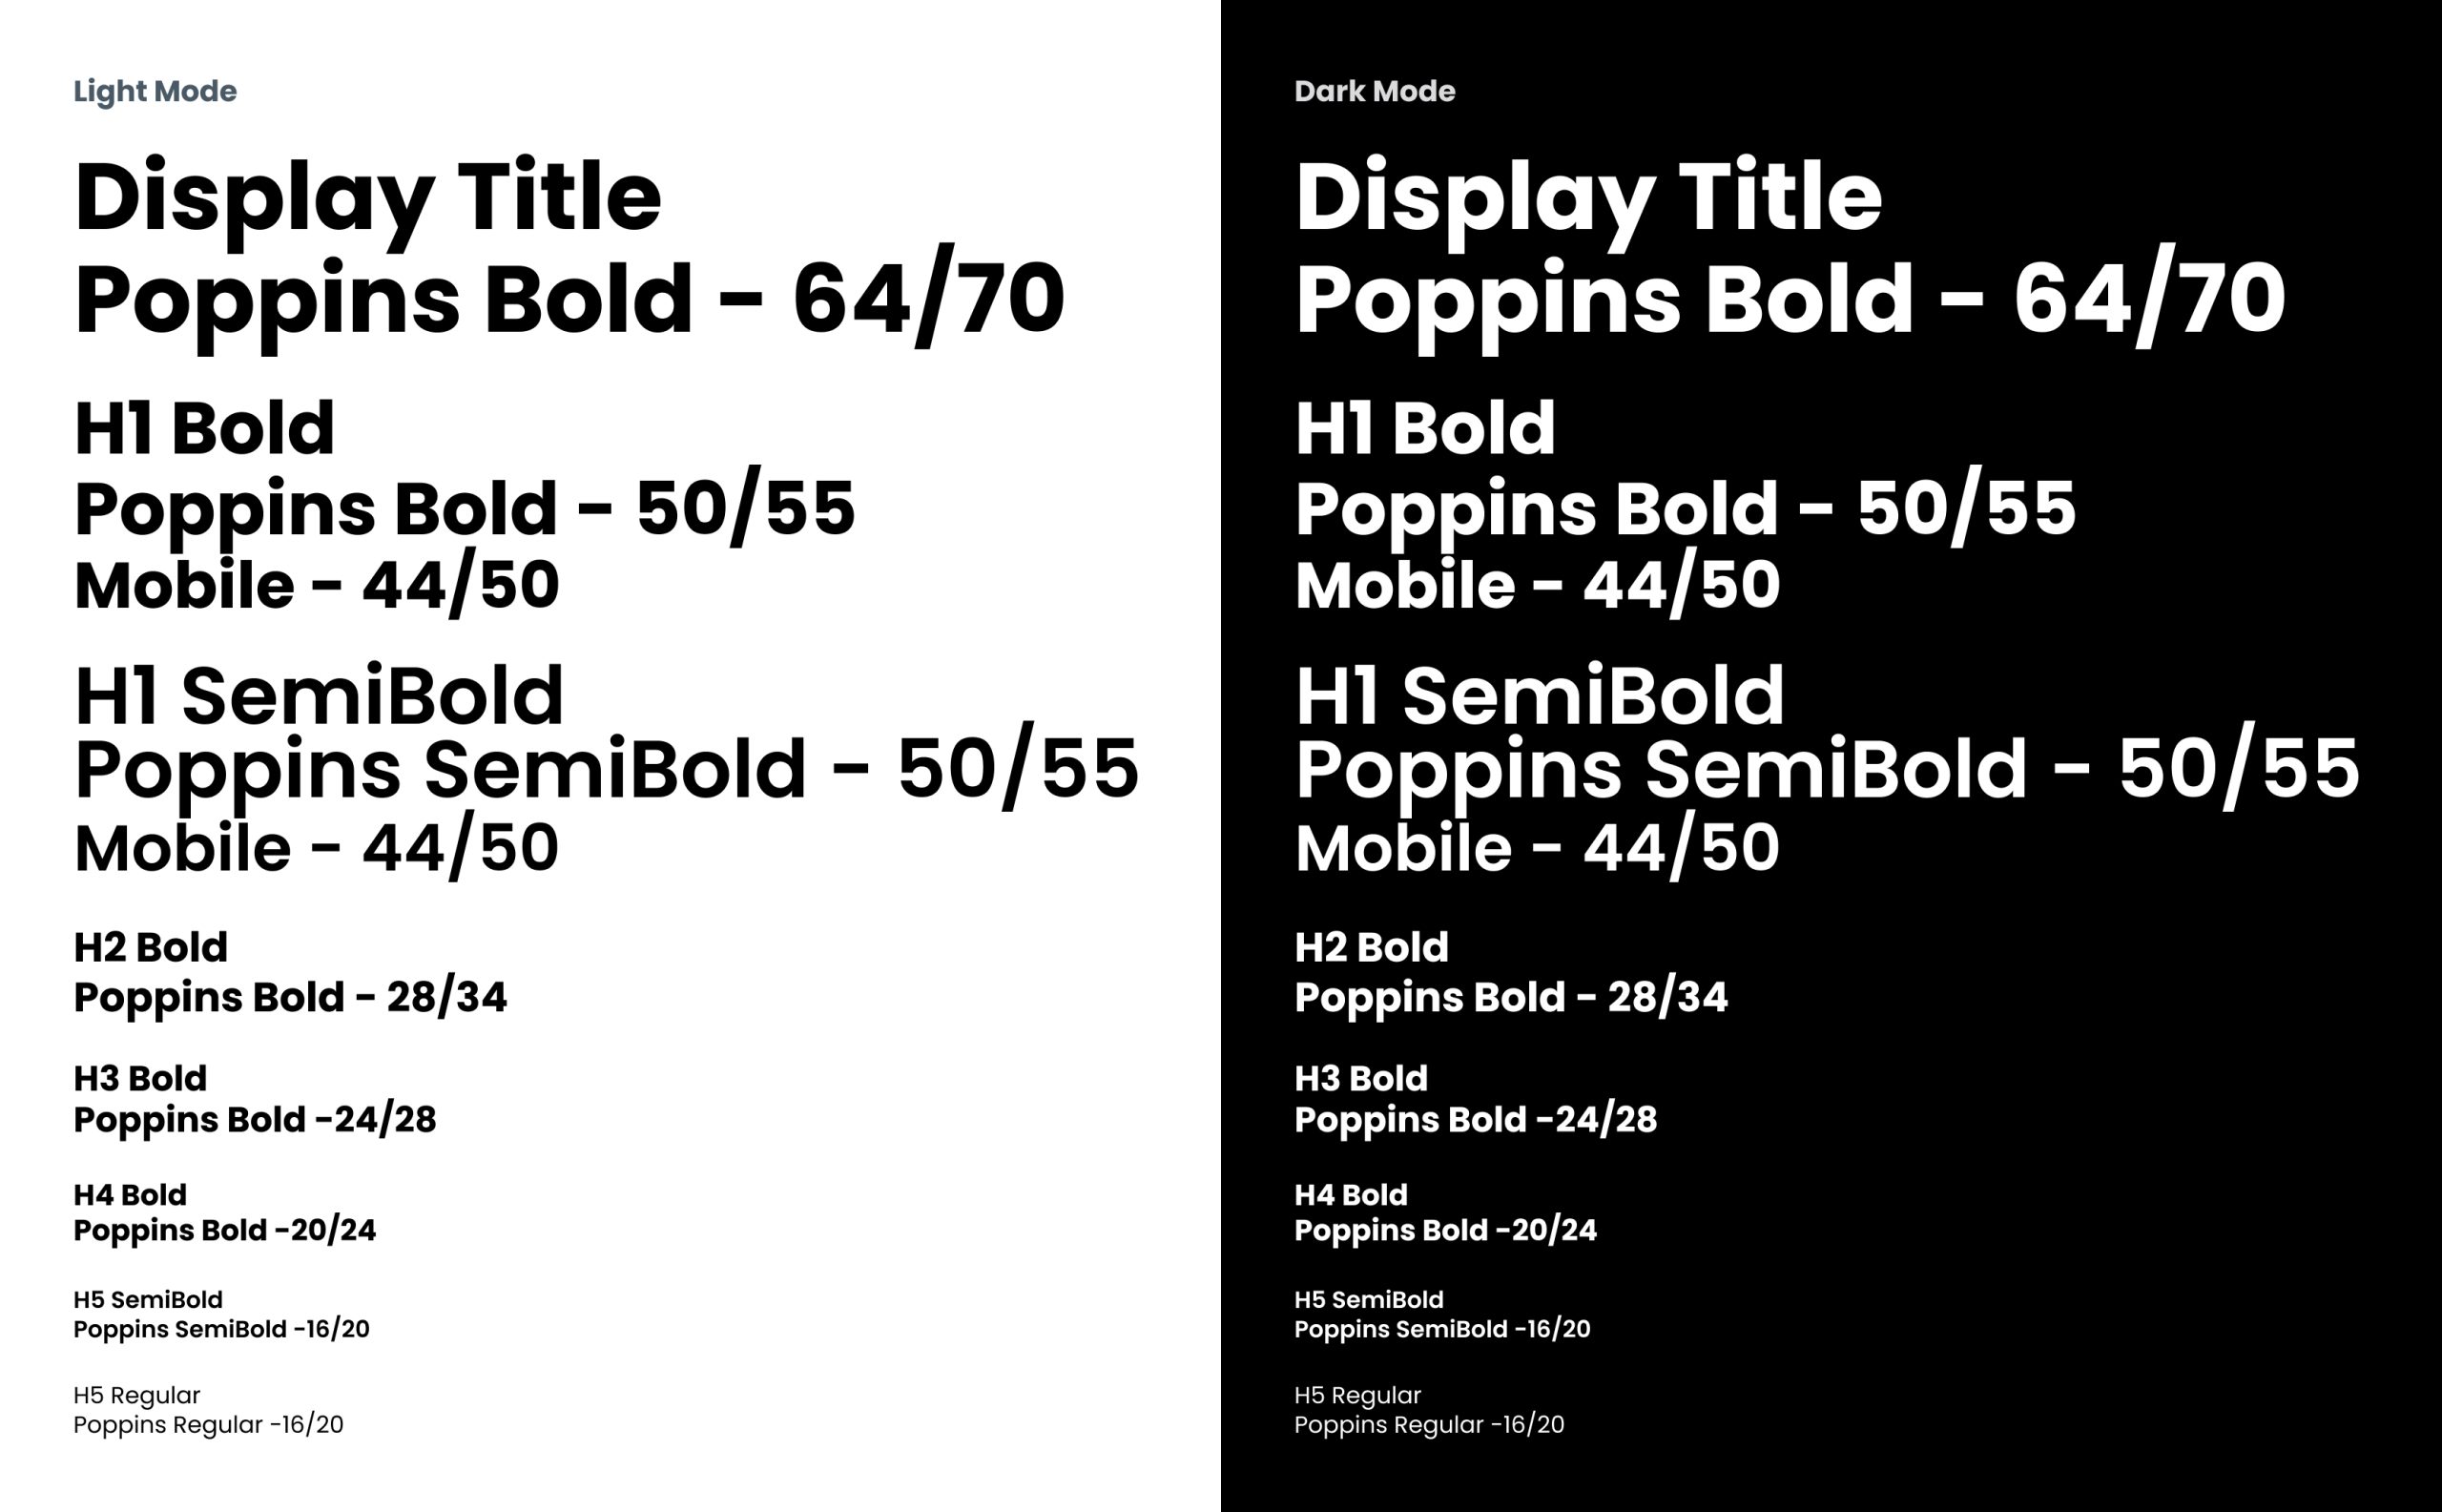 Display title - Poppins bold 64/70 H1 bold - Poppins bold 50/55 mobile - 44/50 H1 semibold - Poppins semibold - 50/55 mobile - 44/50 H2 bold - Poppins bold 28/34 H3 bold - poppins bold 24/28 H4 bold - poppins bold 20/24 H5 semibold - poppins semibold 16/20 H5 regular - poppins regular 16/20